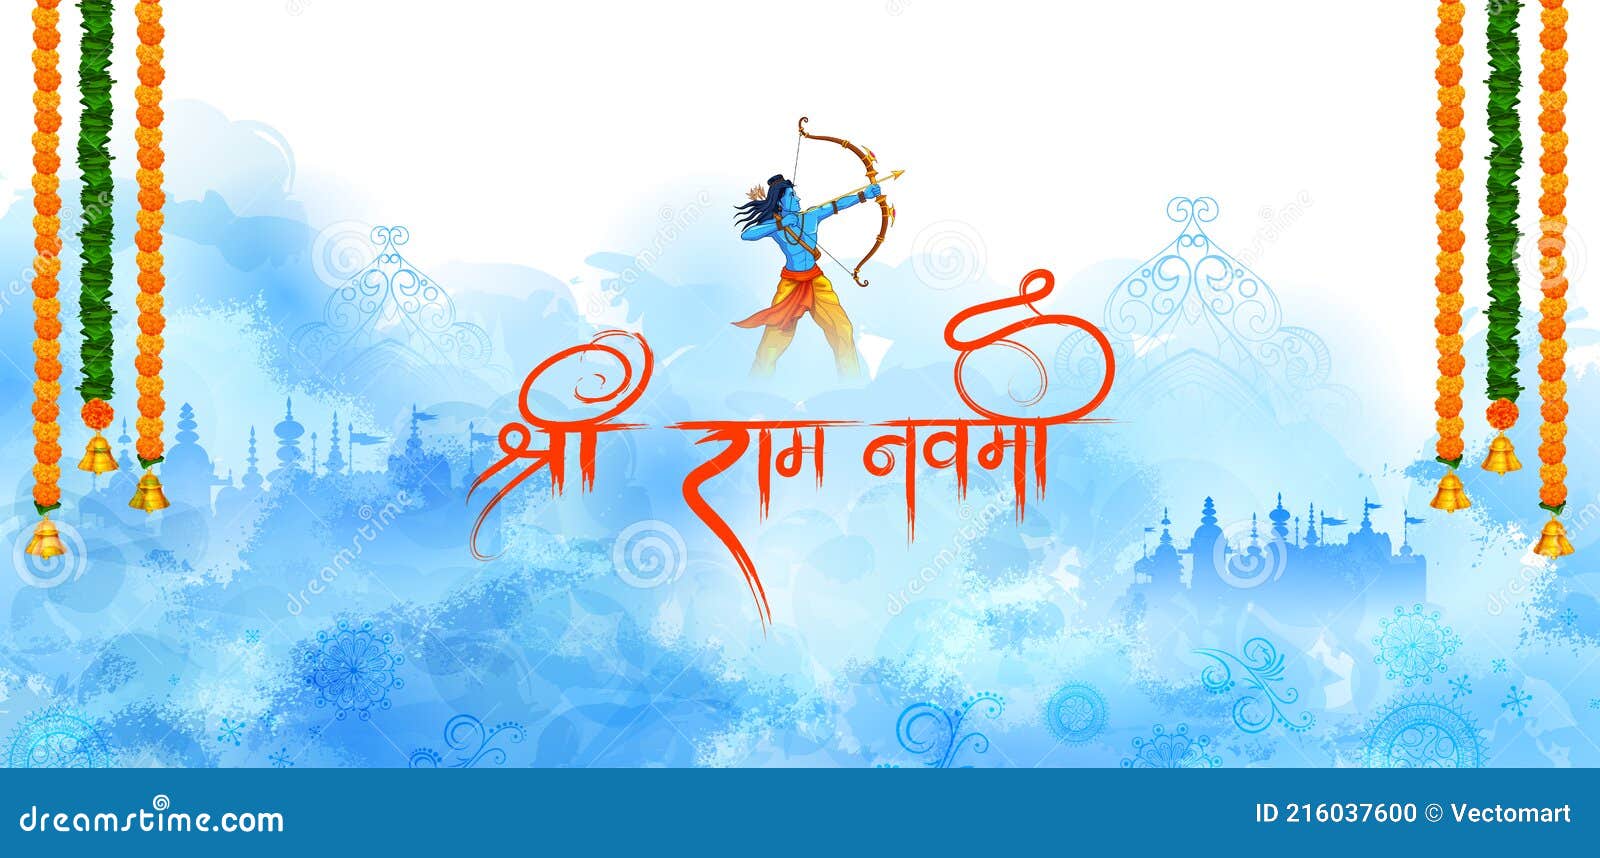 Jai Shree Ram Happy Ram Navami Download Free For Whatsapp  Download Bhakti  Photo Hd  1024x1024 Wallpaper  teahubio